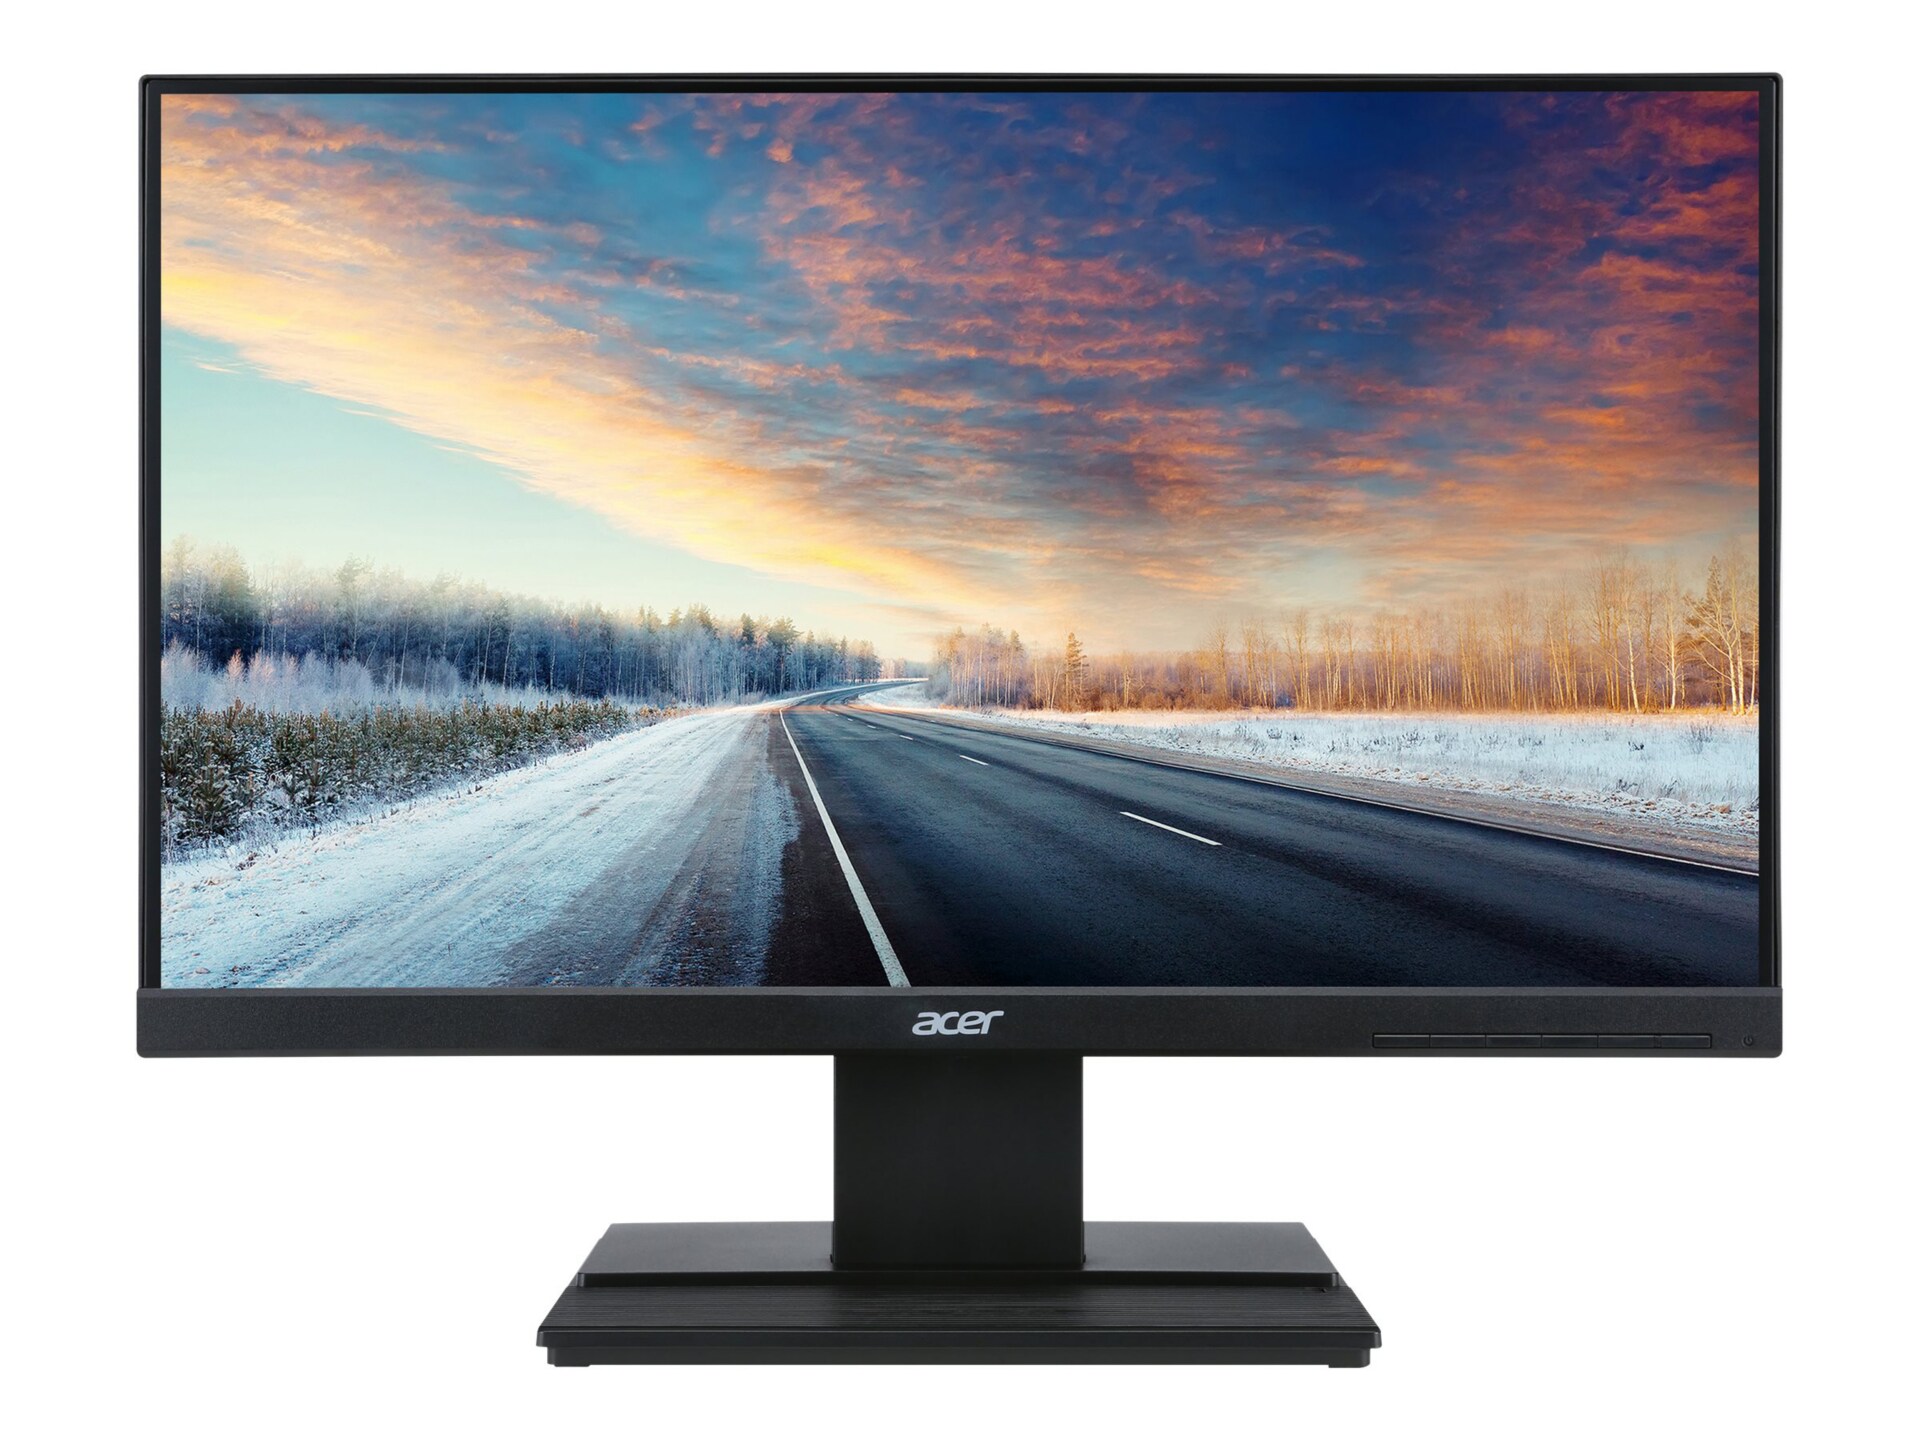 Acer V226HQLAbmd 21.5" LED-backlit LCD - Black